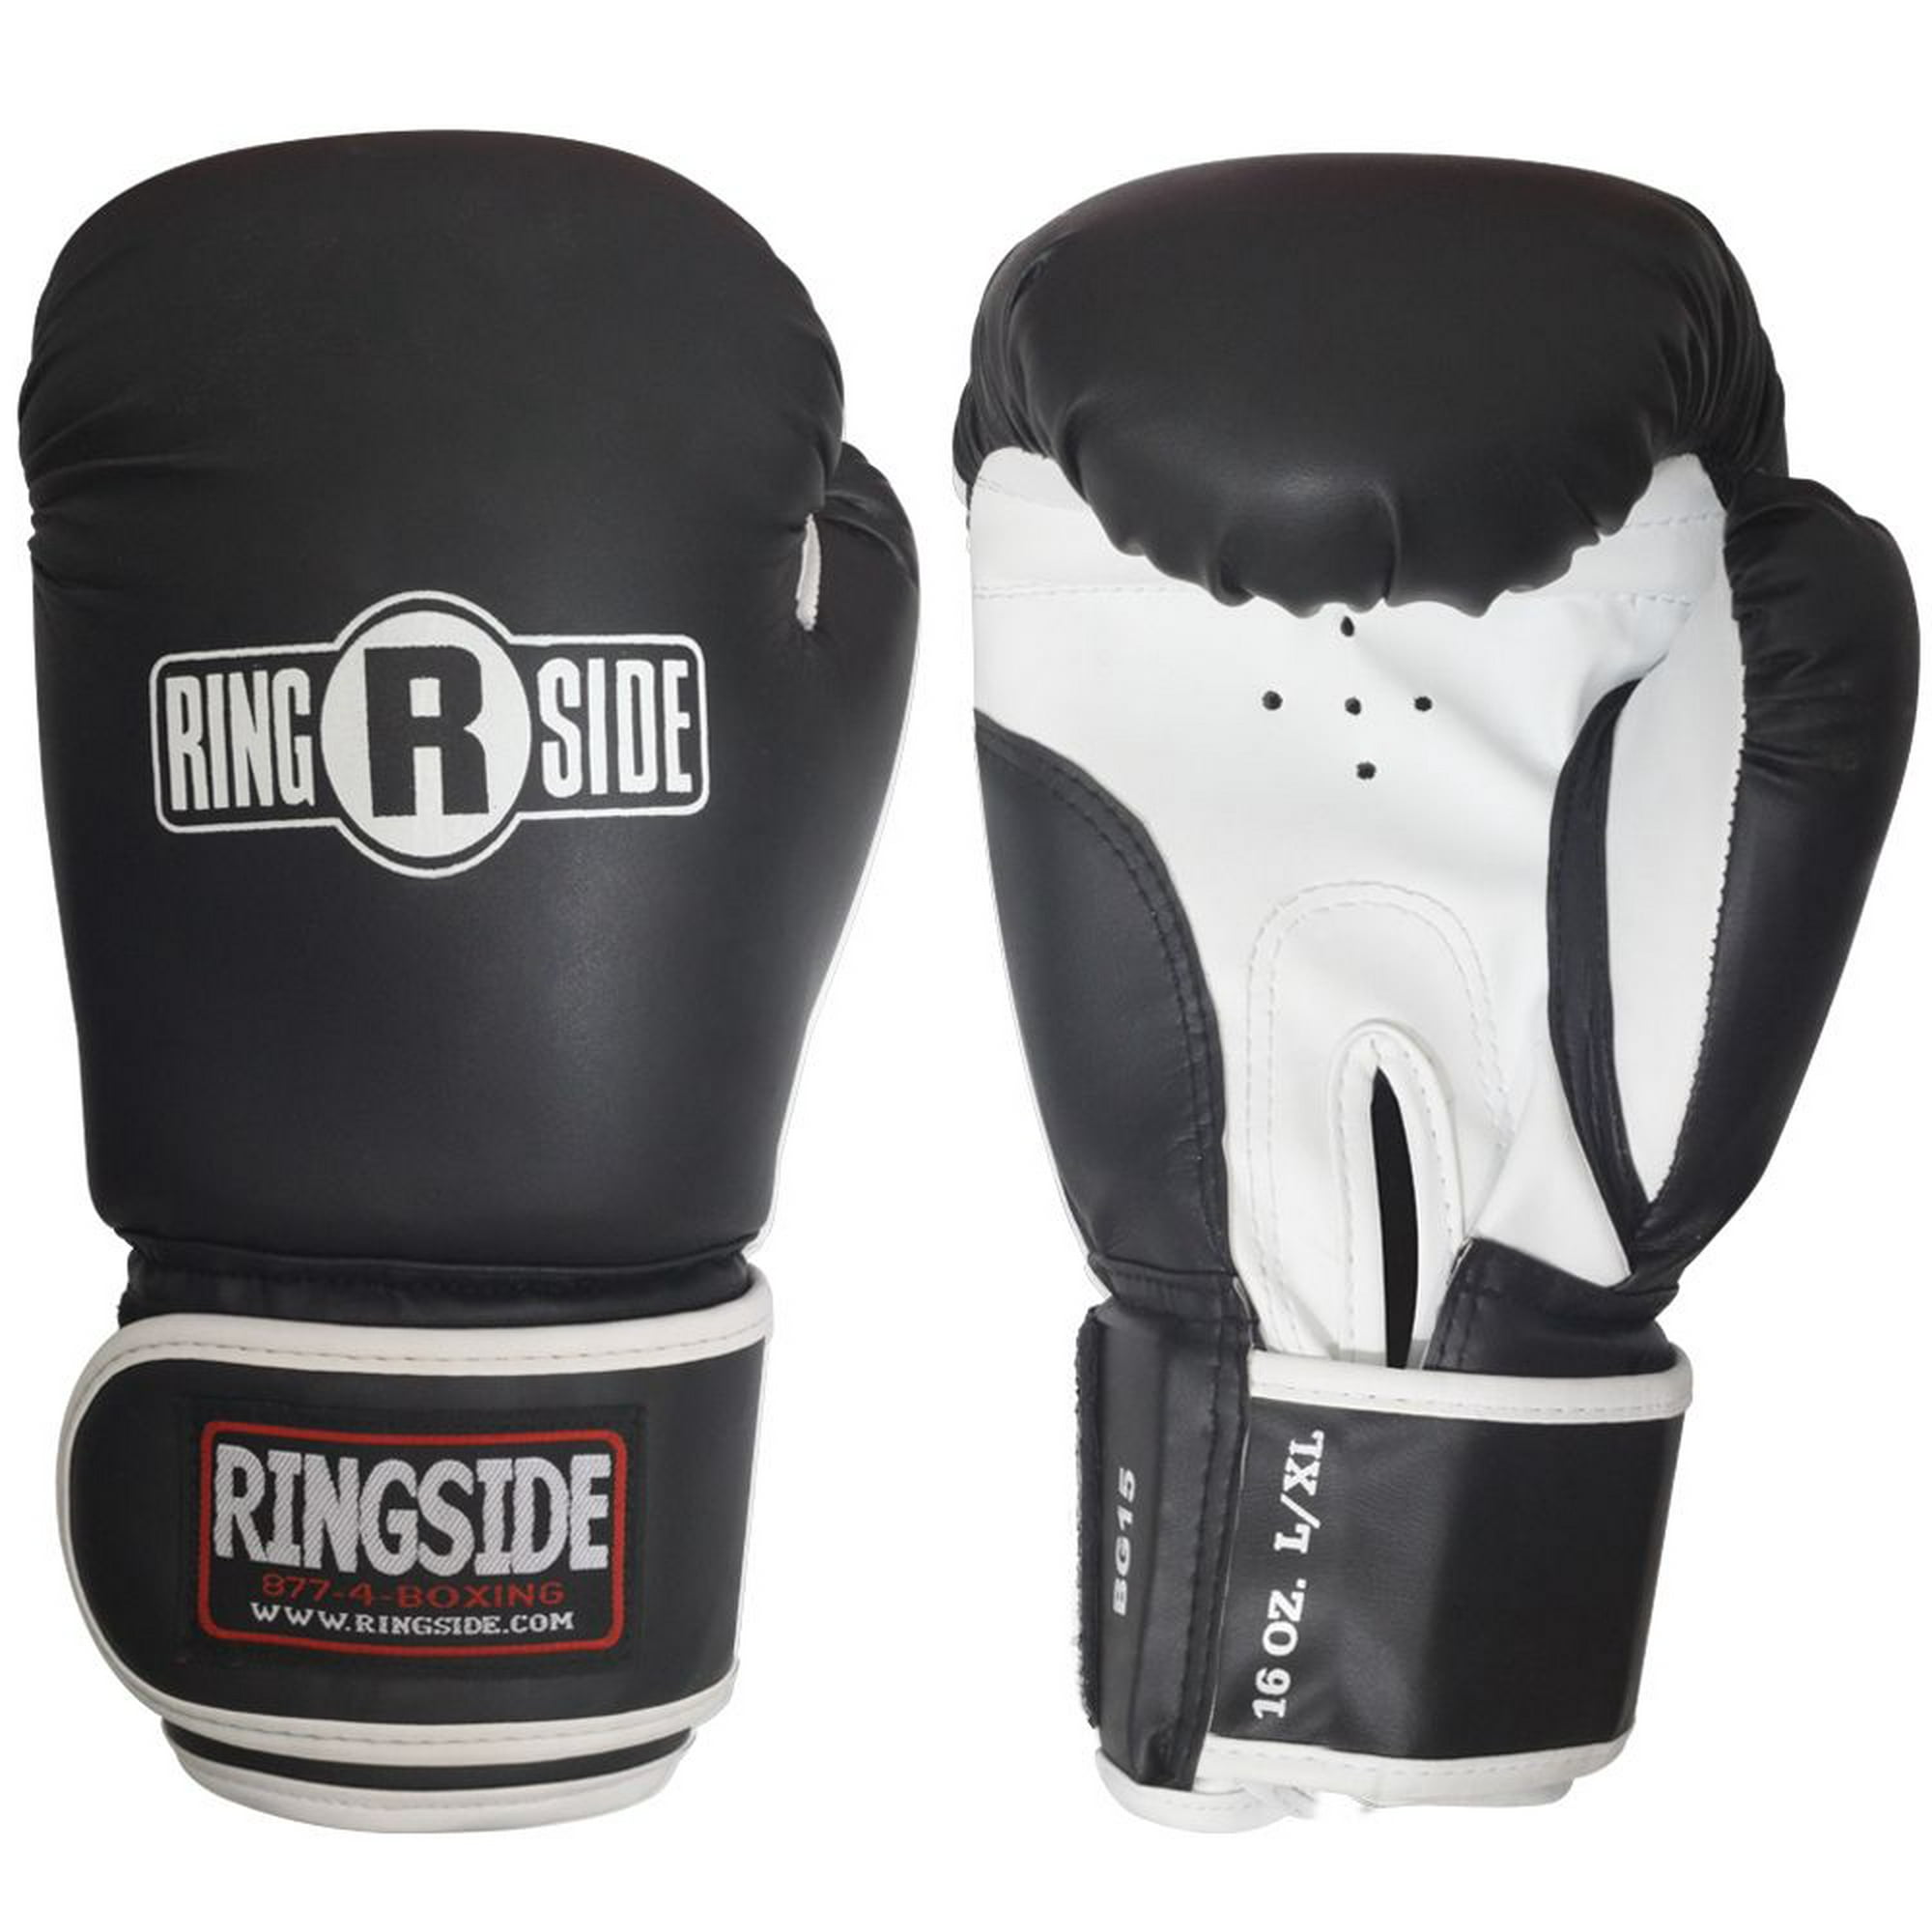 Set de boxeo infantil de Ringside, con saco y guantes de boxeo